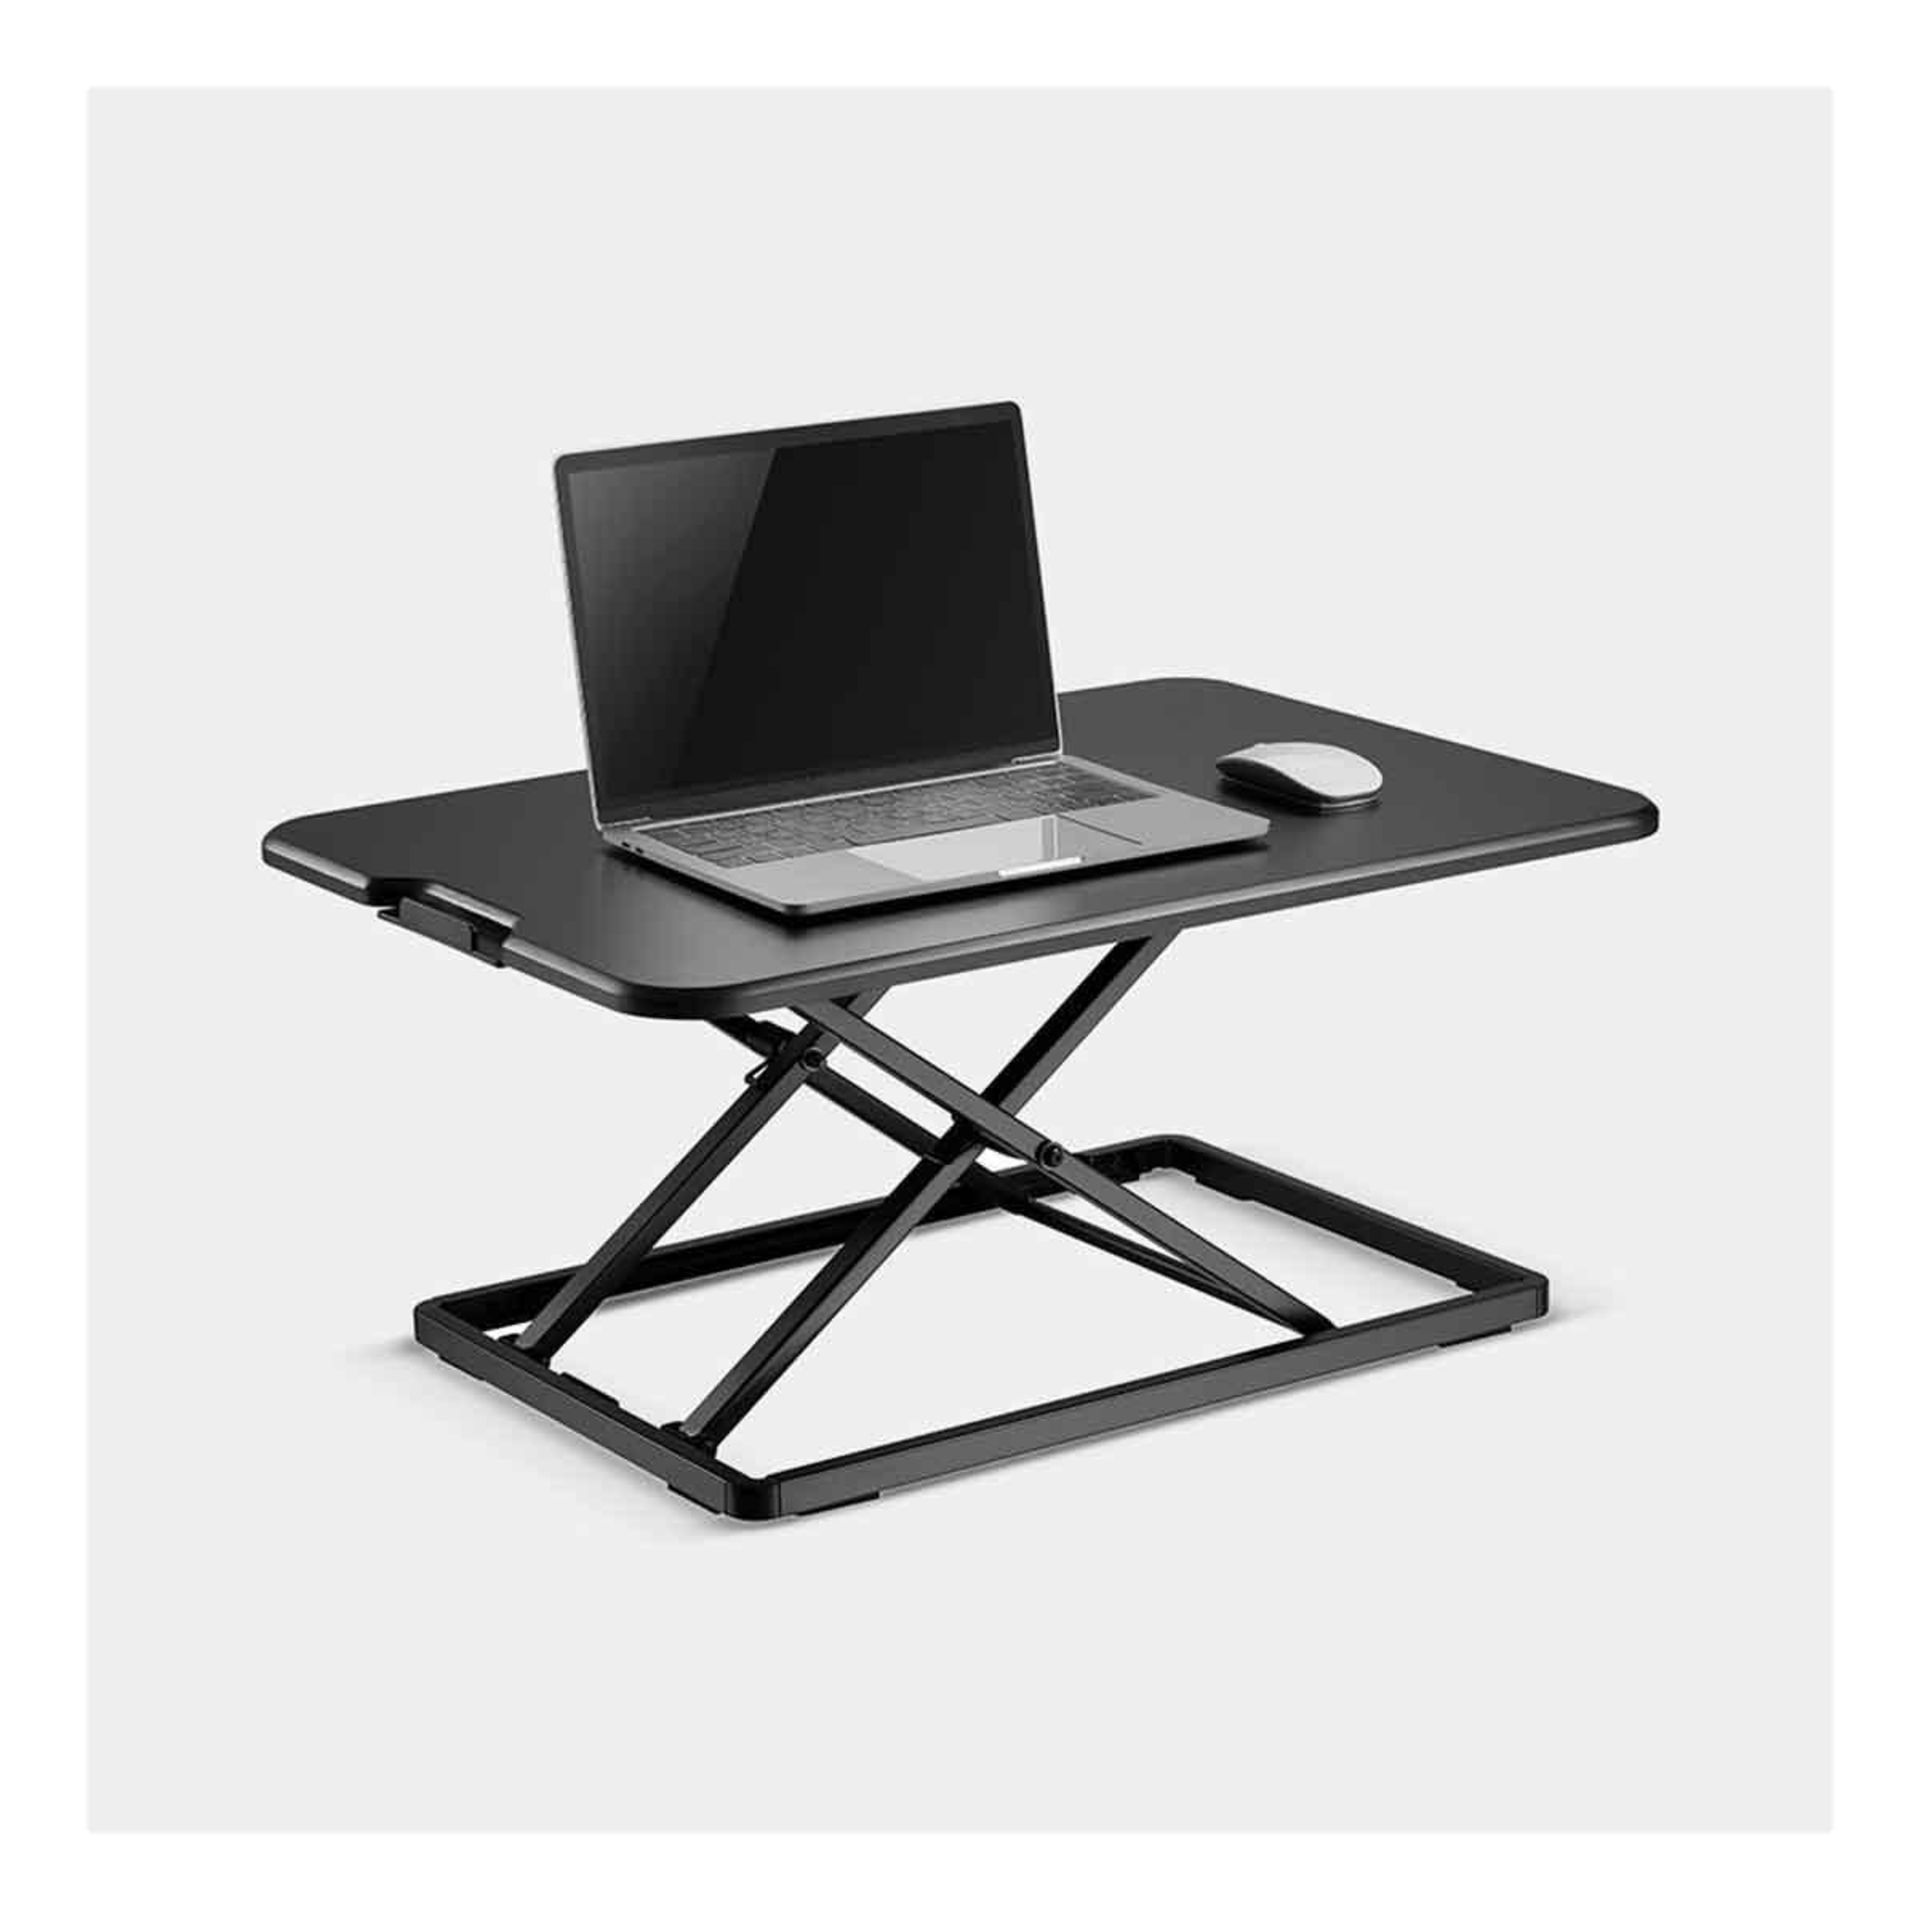 Ultra-Slim Sit-Stand Desk Converter - S2. Ultra-Slim Sit-Stand Desk ConverterWe spend so much of our